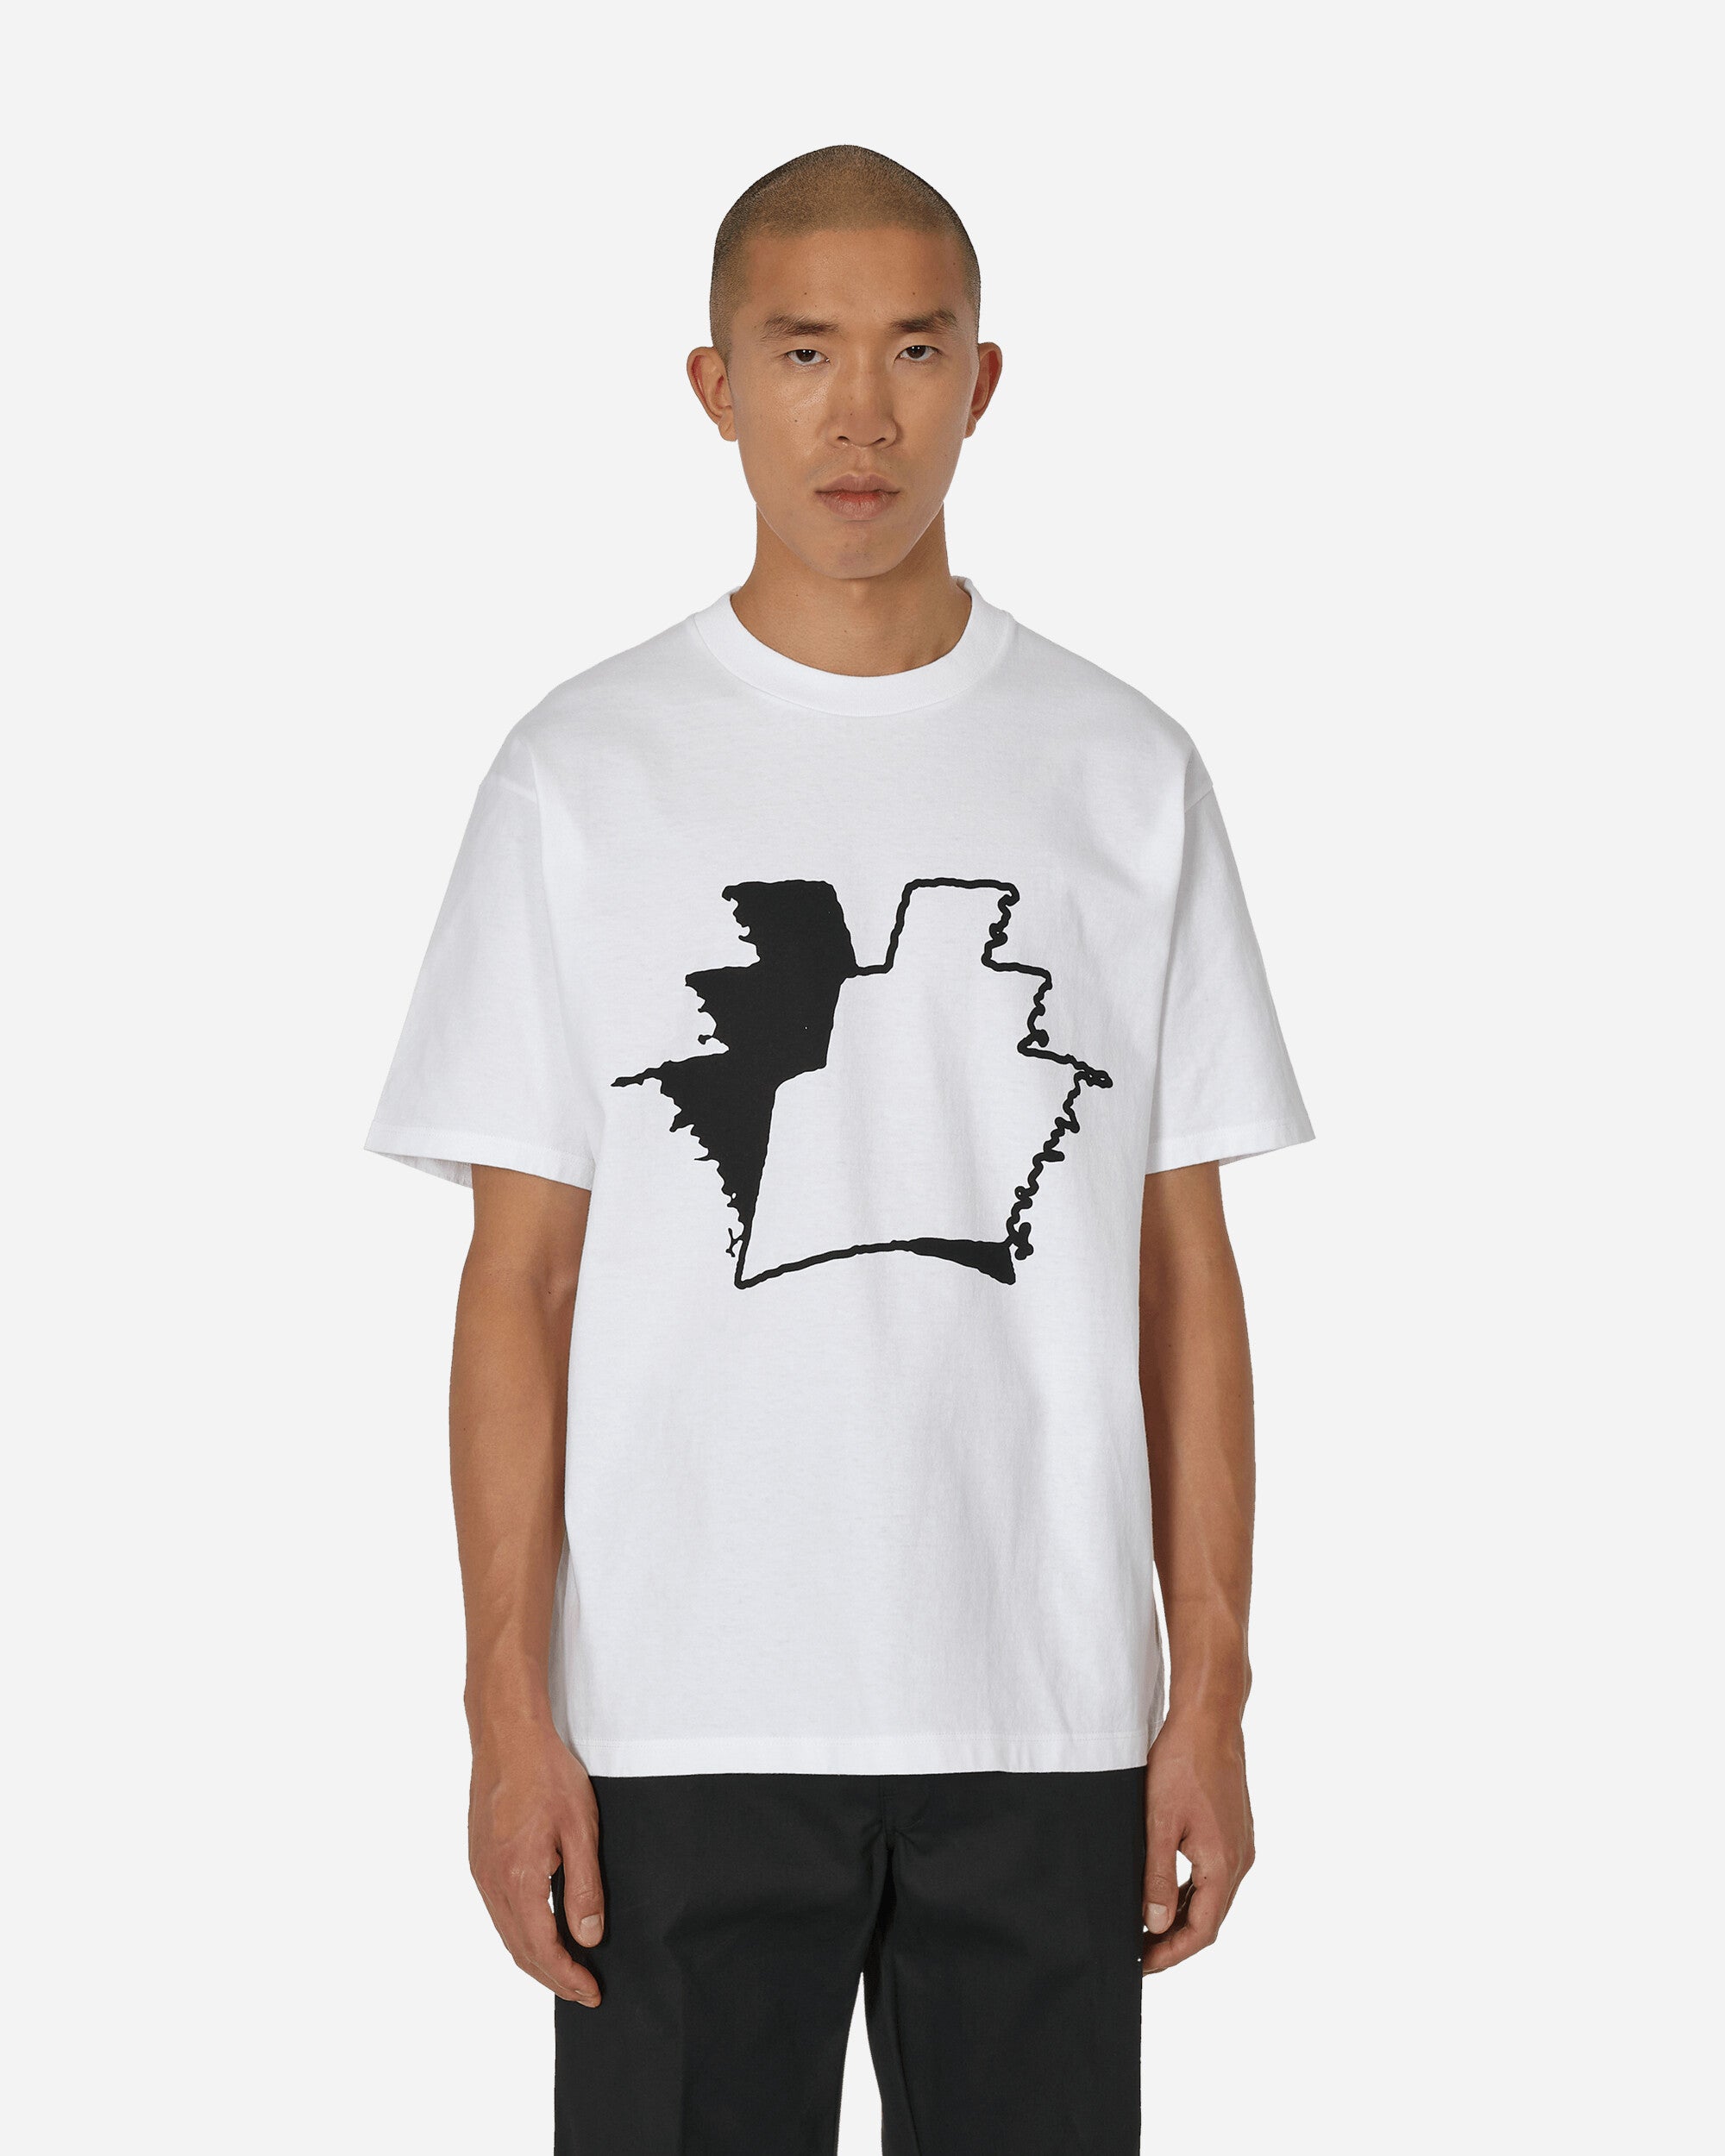 Cav Empt After Image T-Shirt White - Slam Jam® Official Store